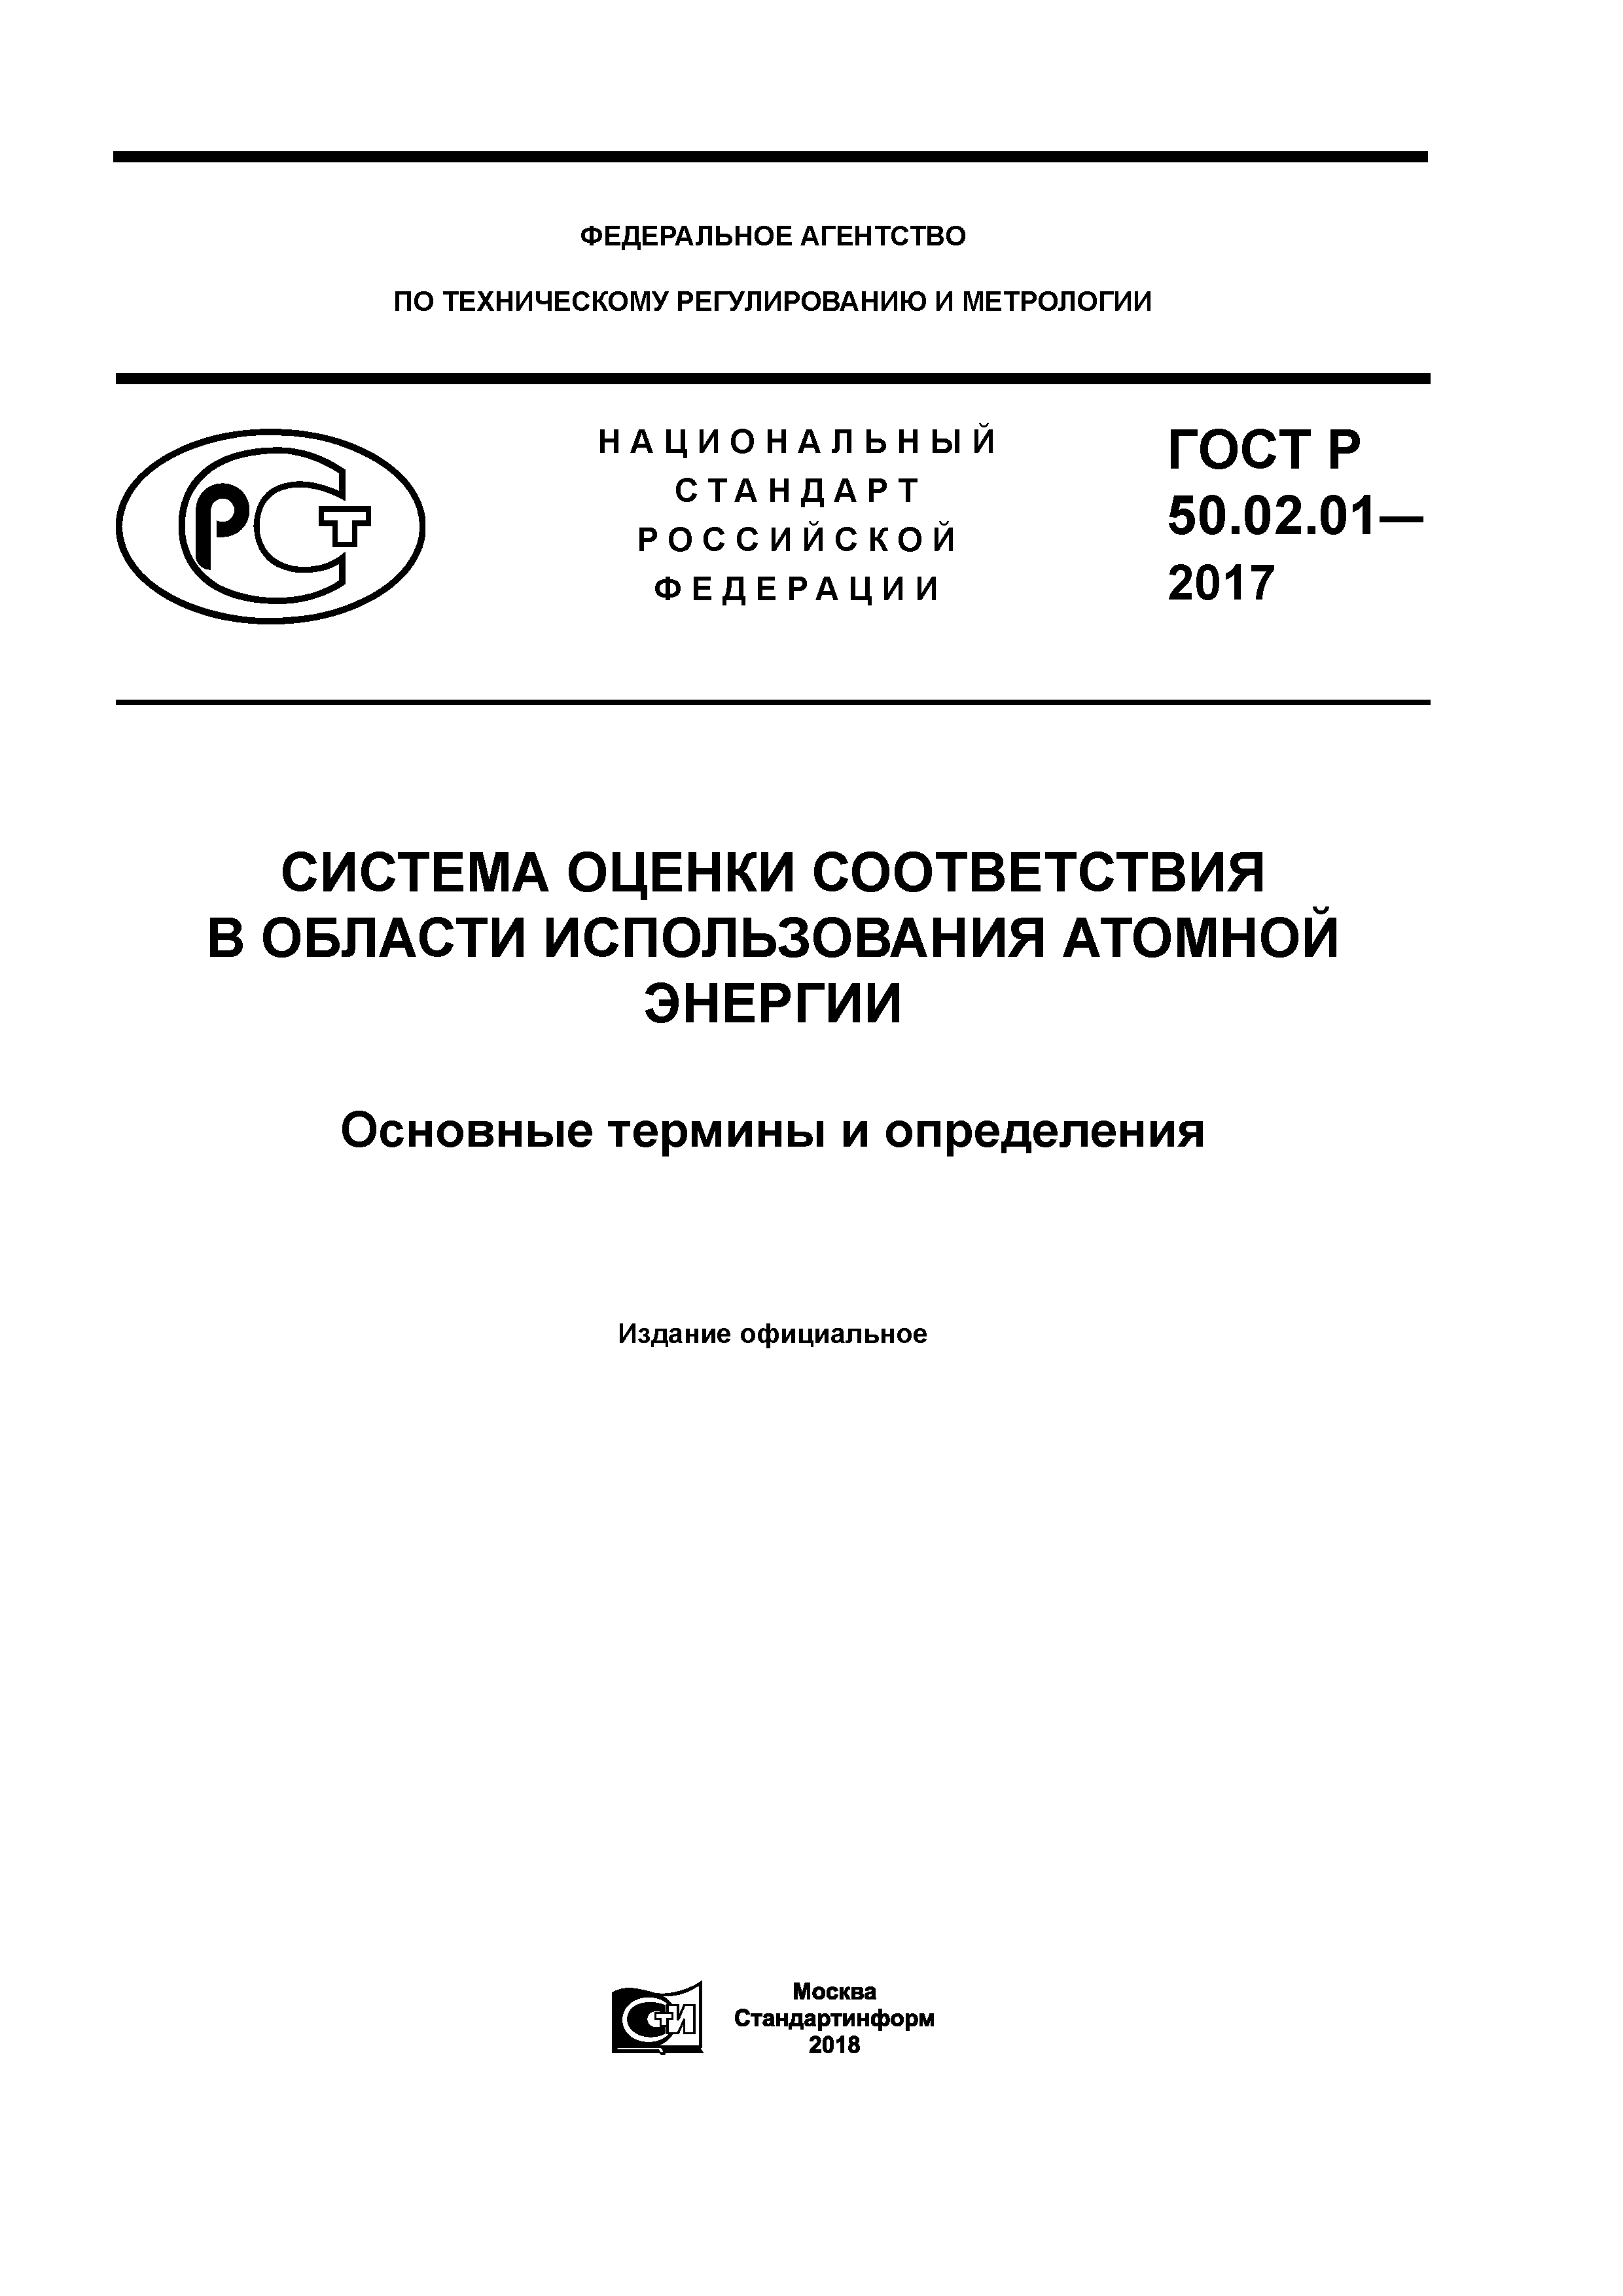 ГОСТ Р 50.02.01-2017